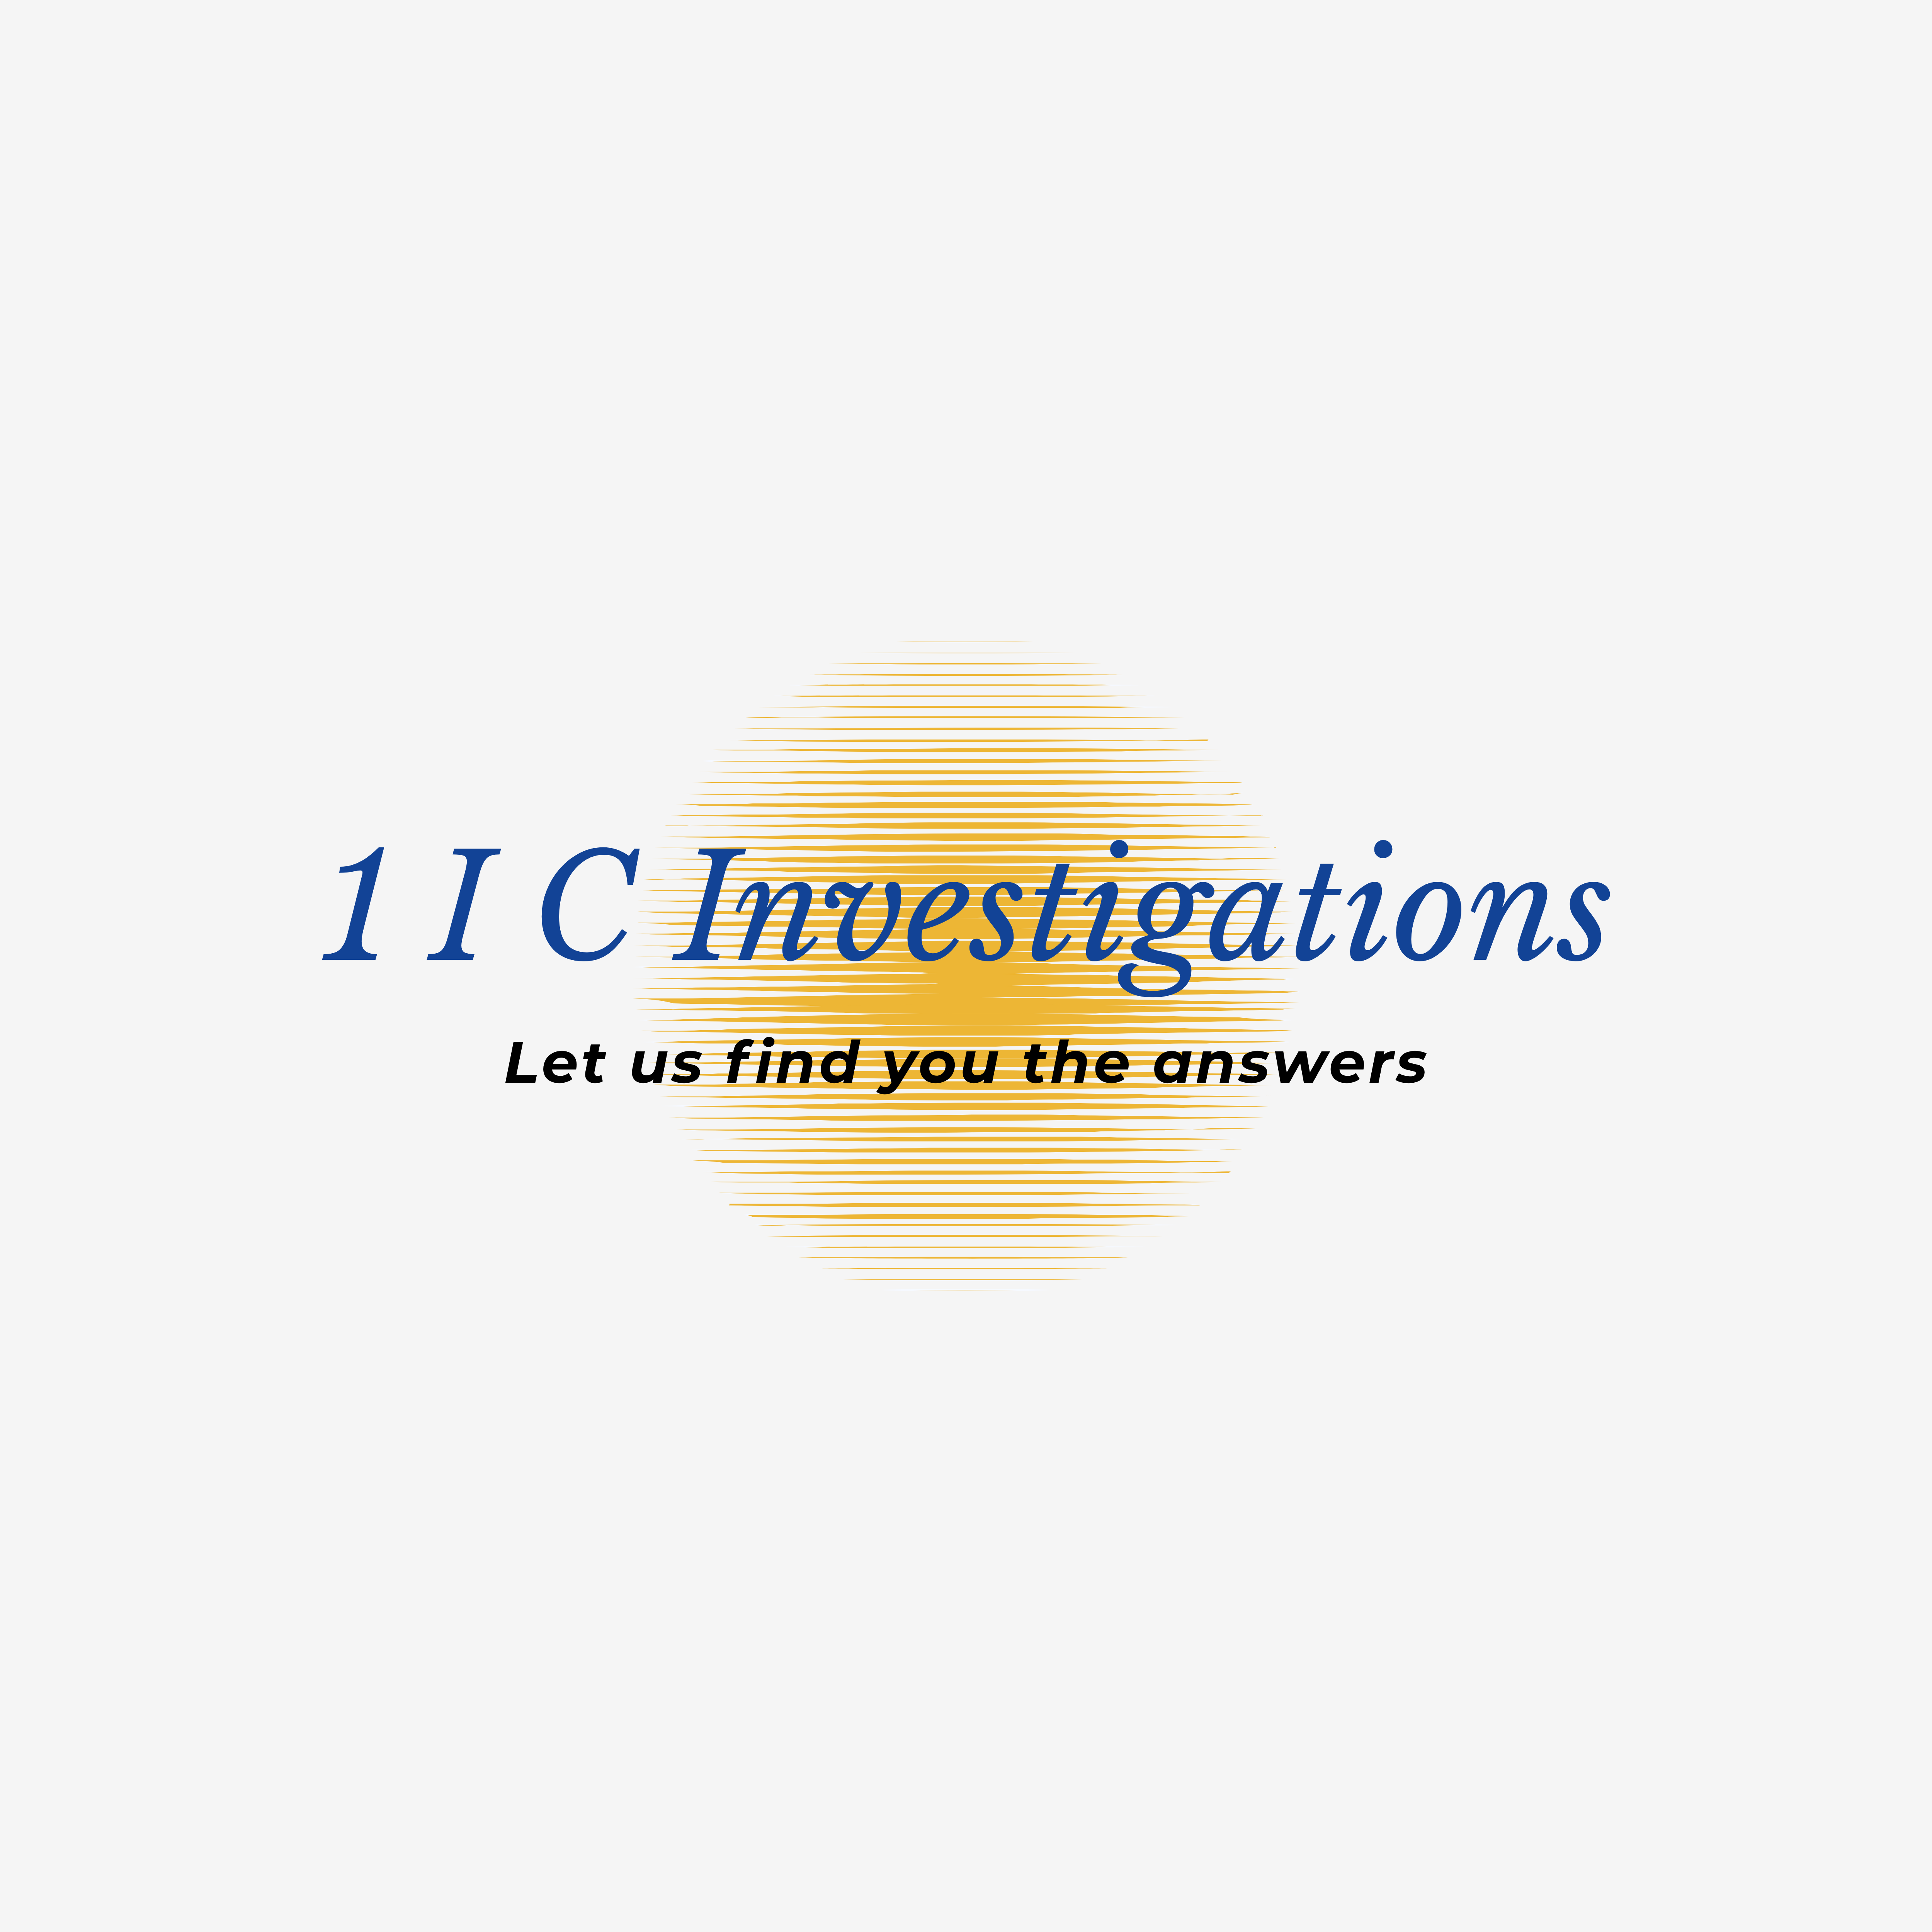 1 I C Investigations